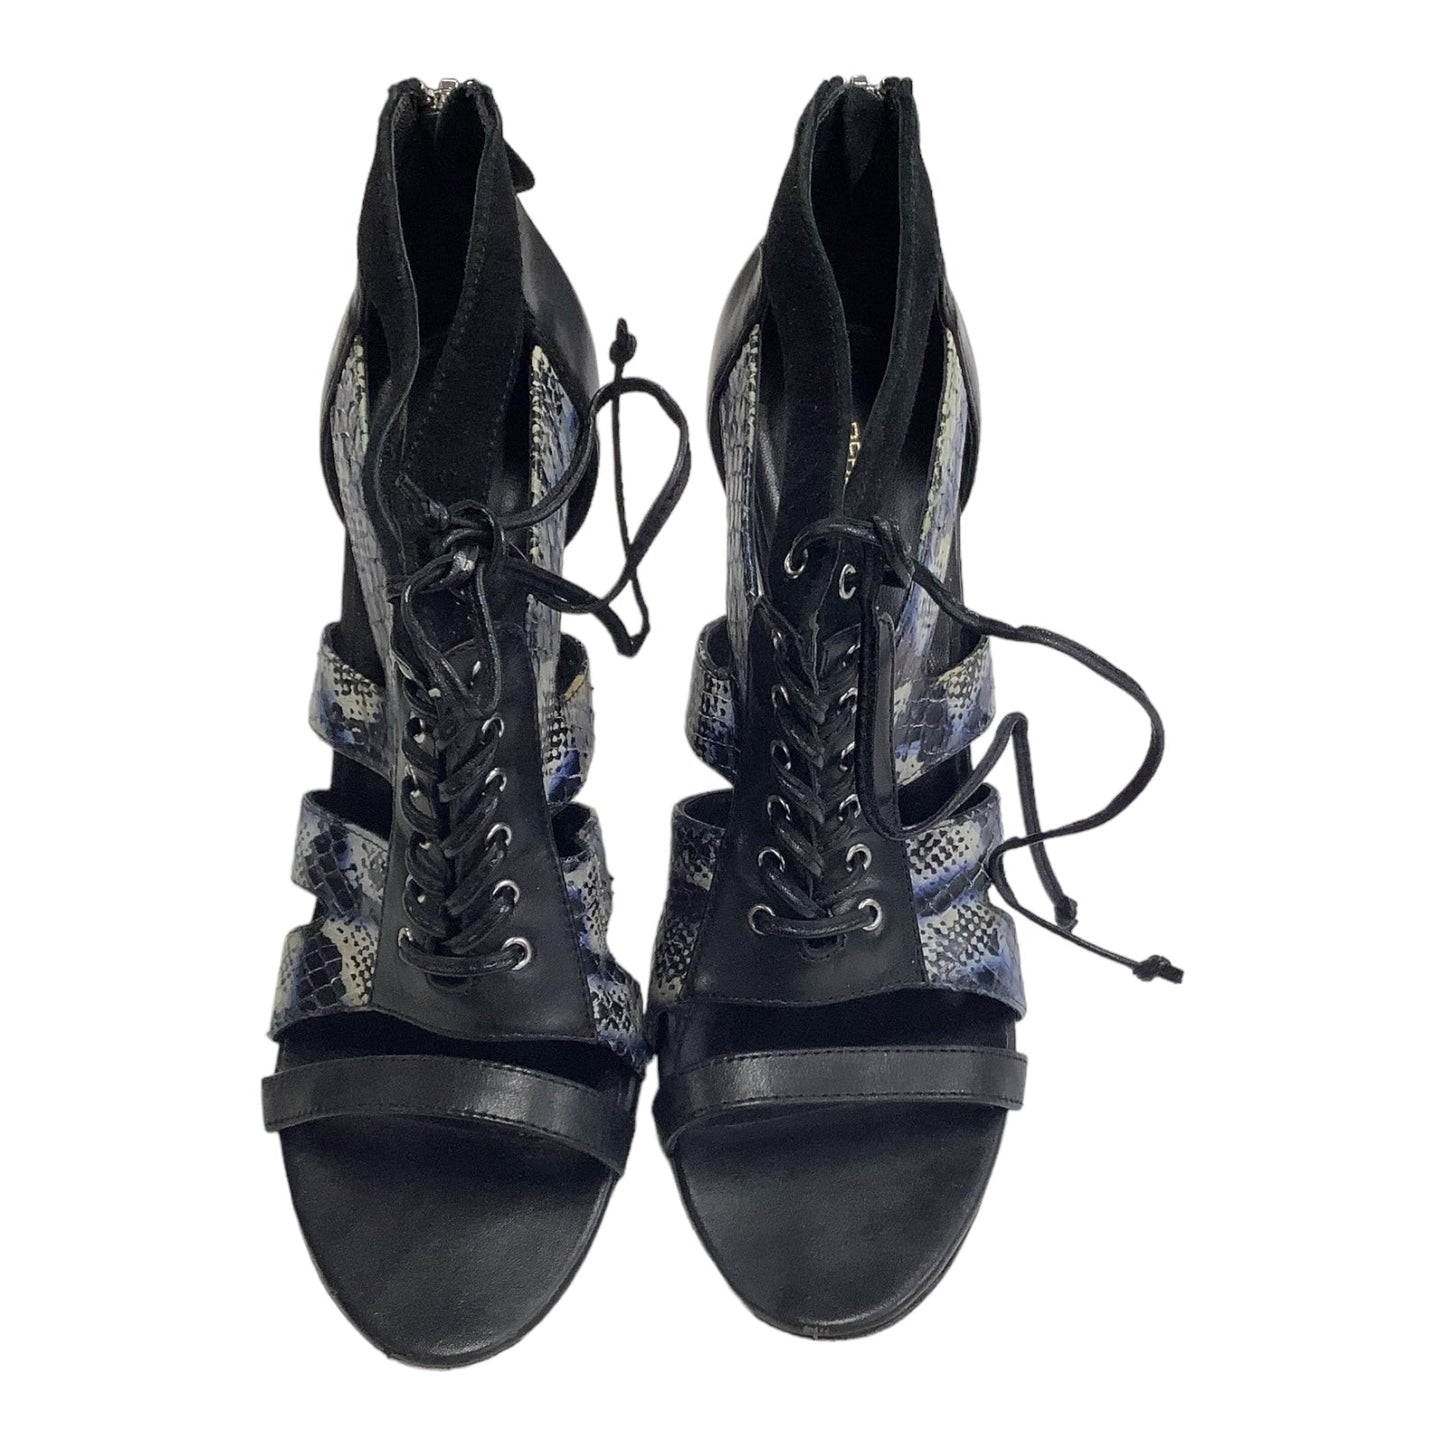 Black & Blue Shoes Heels Stiletto Rebecca Minkoff, Size 8